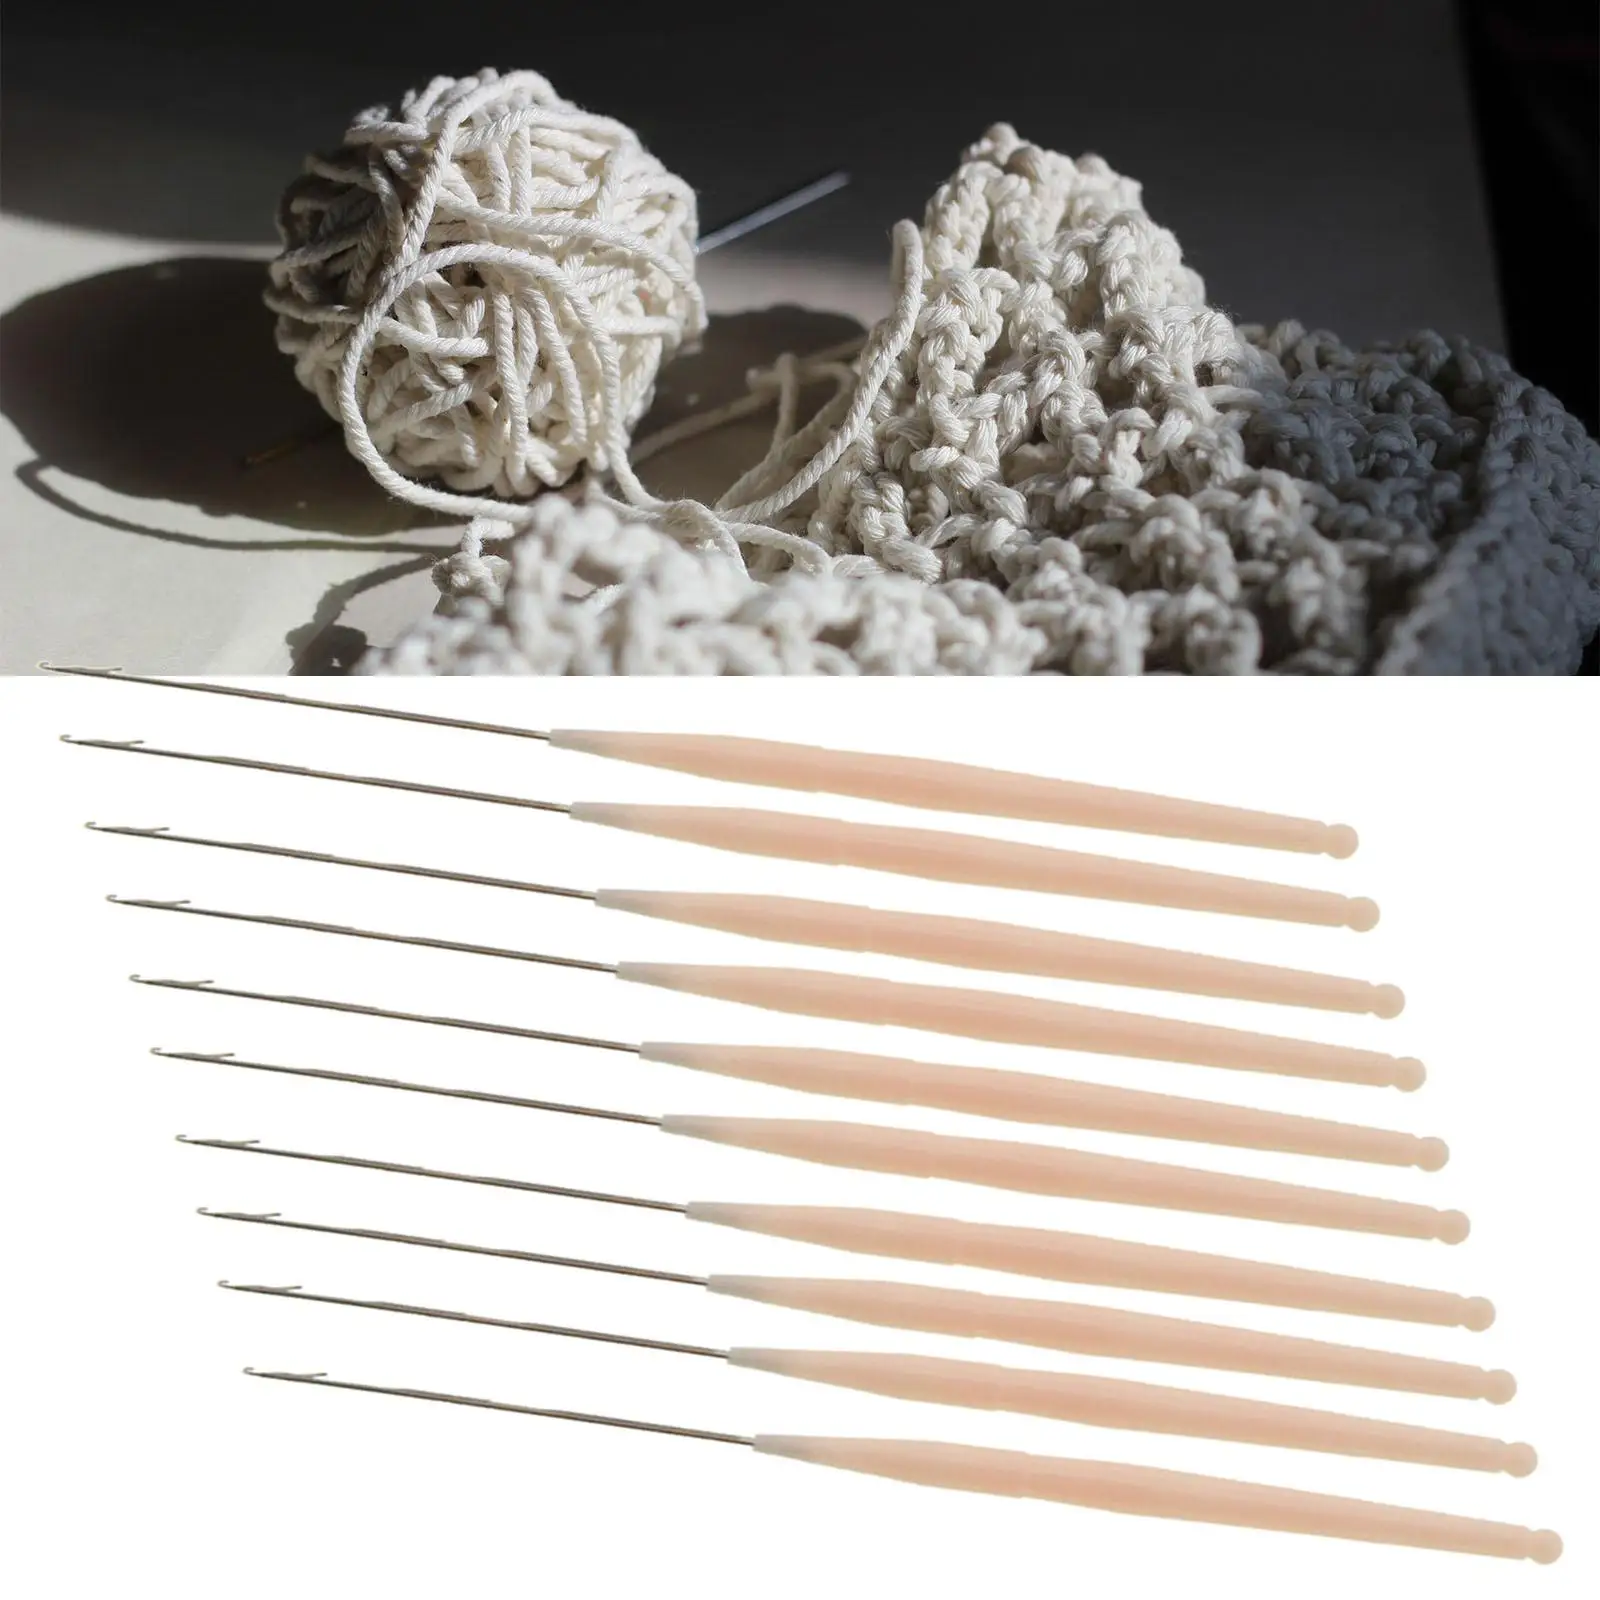 10pcs Latch Crochet Hooks Kit Needles Weaving Sewing Braids Hair Tools Supplies for Beginners